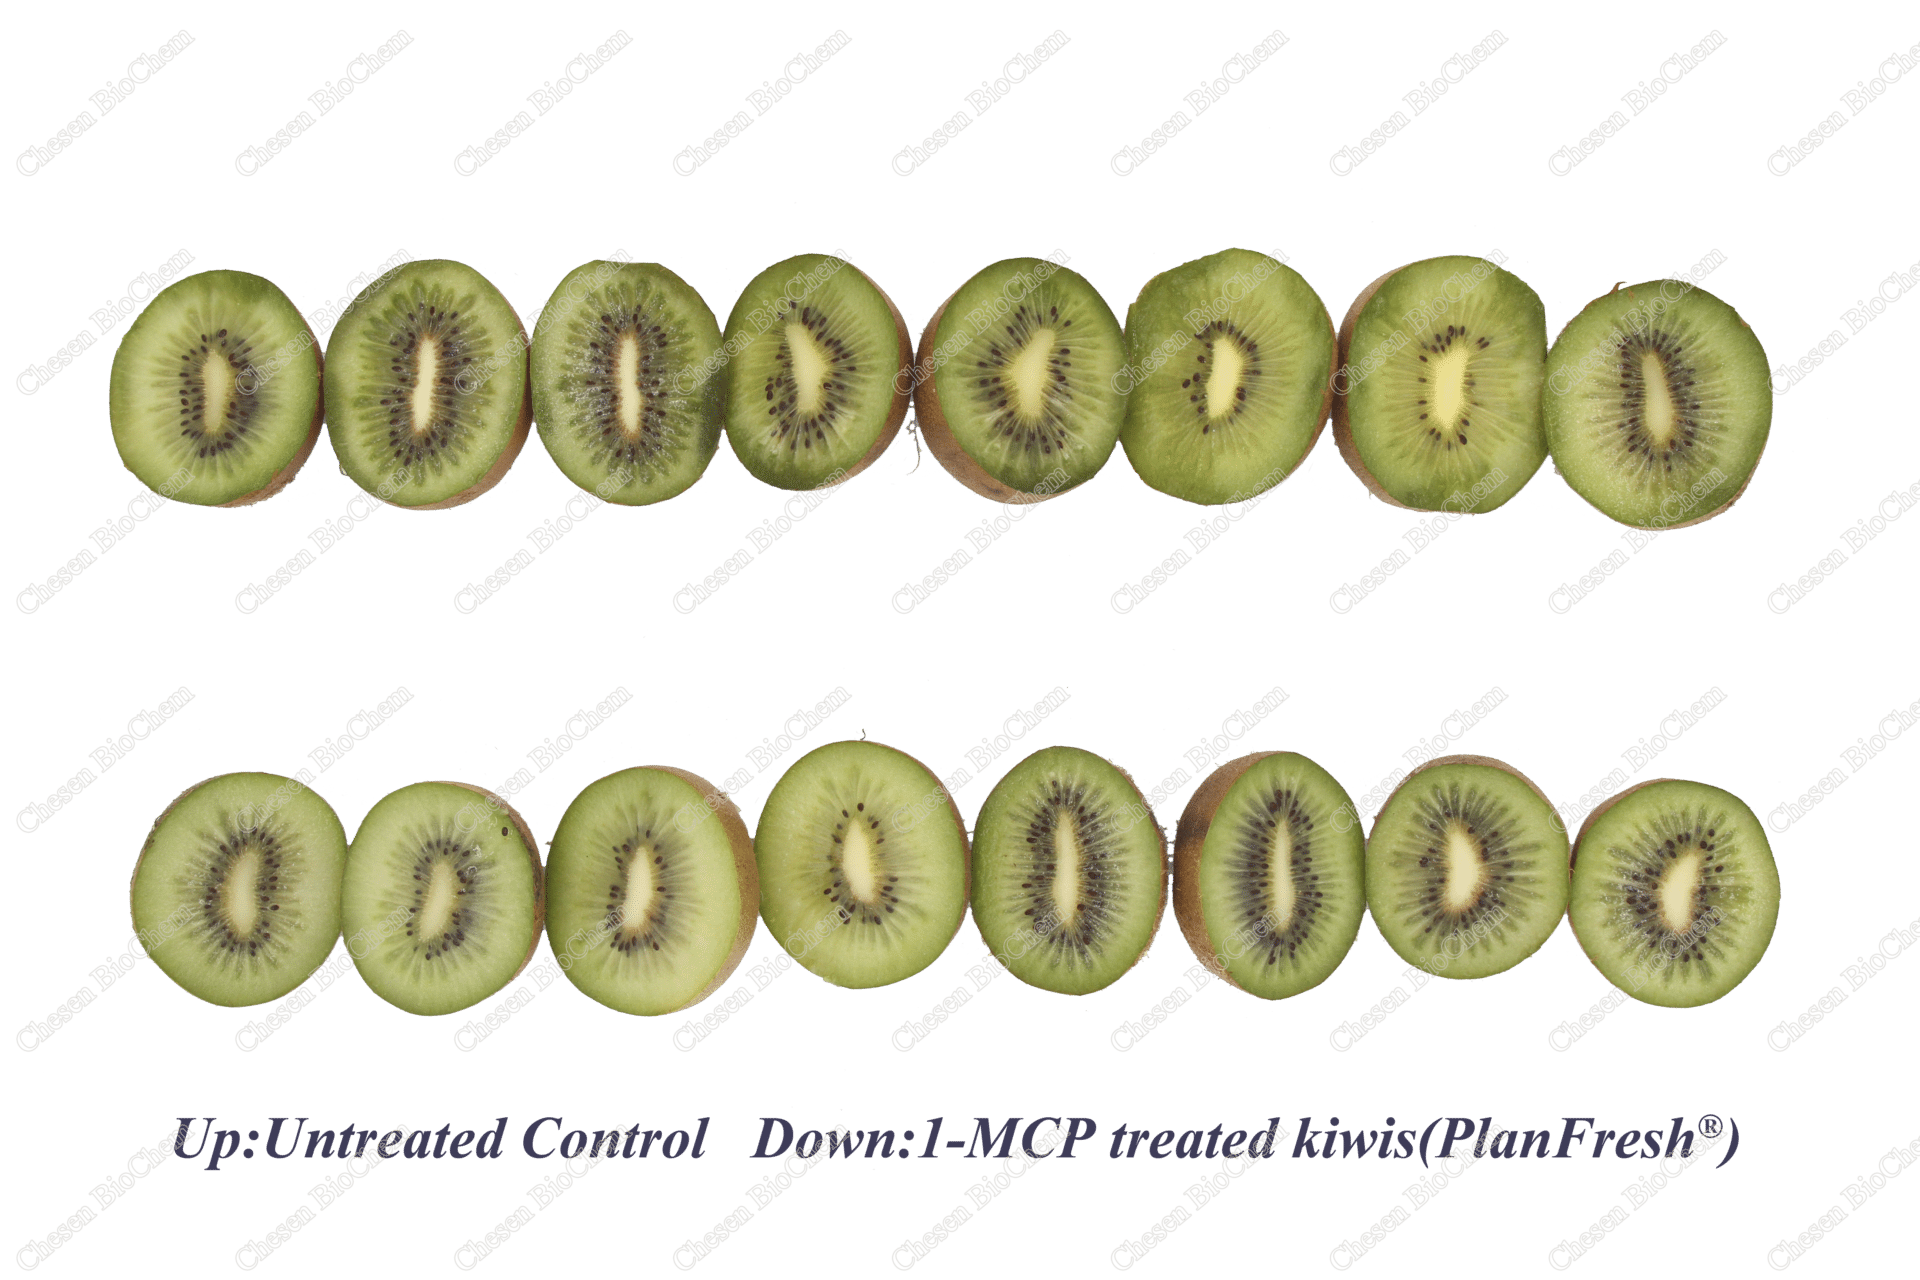 Postharvest Application of 1-MCP Extends Shelf Life of Kiwifruit